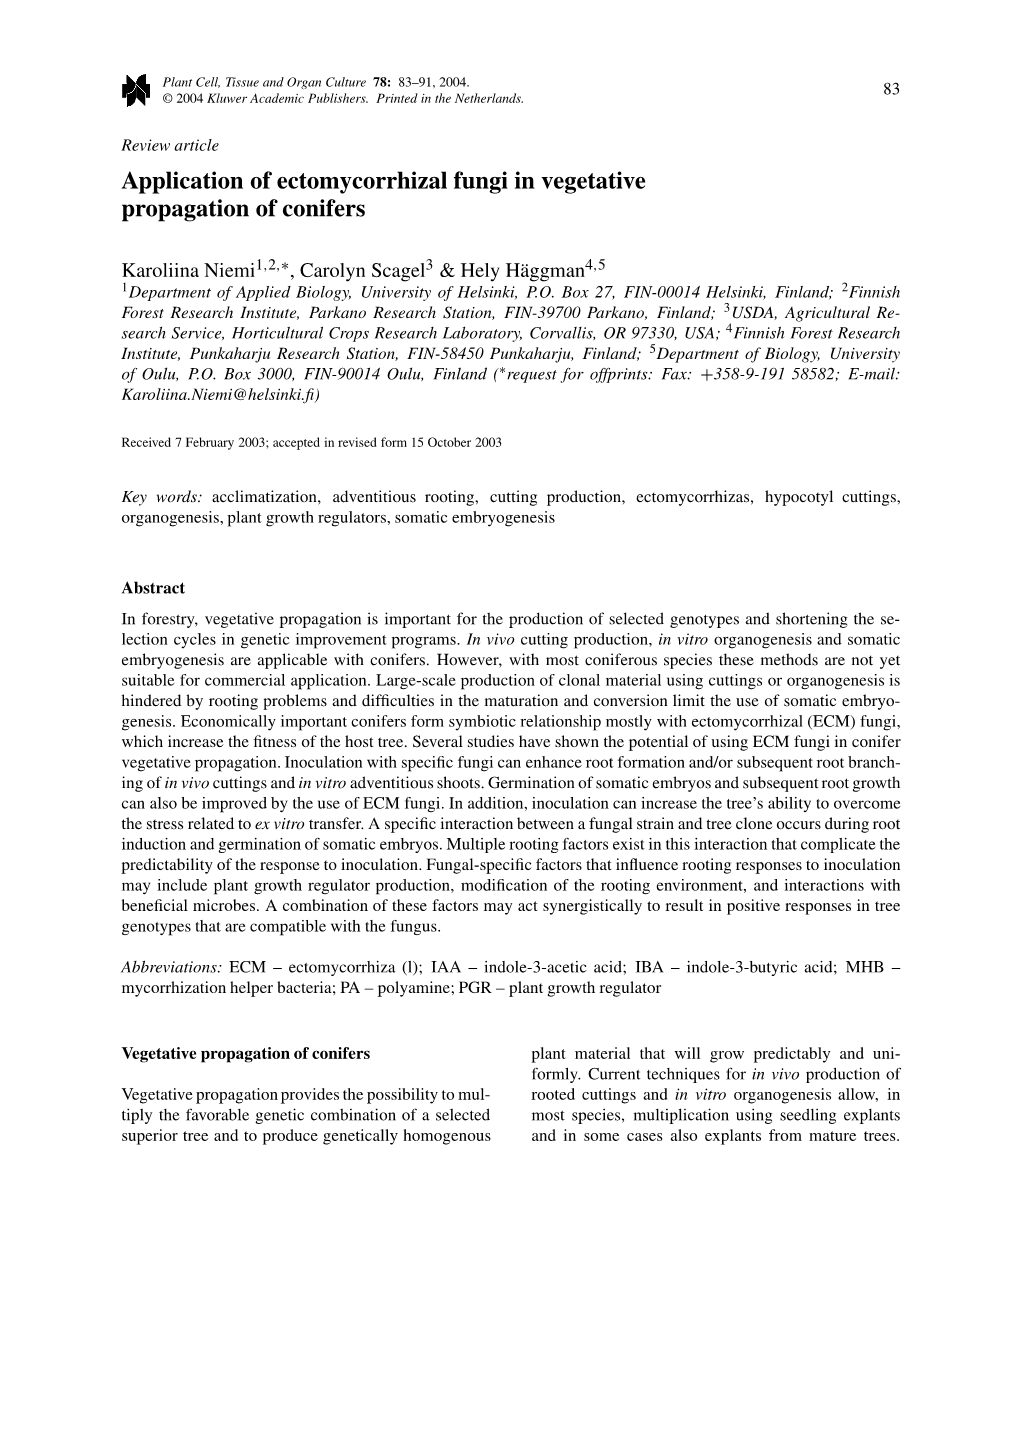 Application of Ectomycorrhizal Fungi in Vegetative Propagation of Conifers